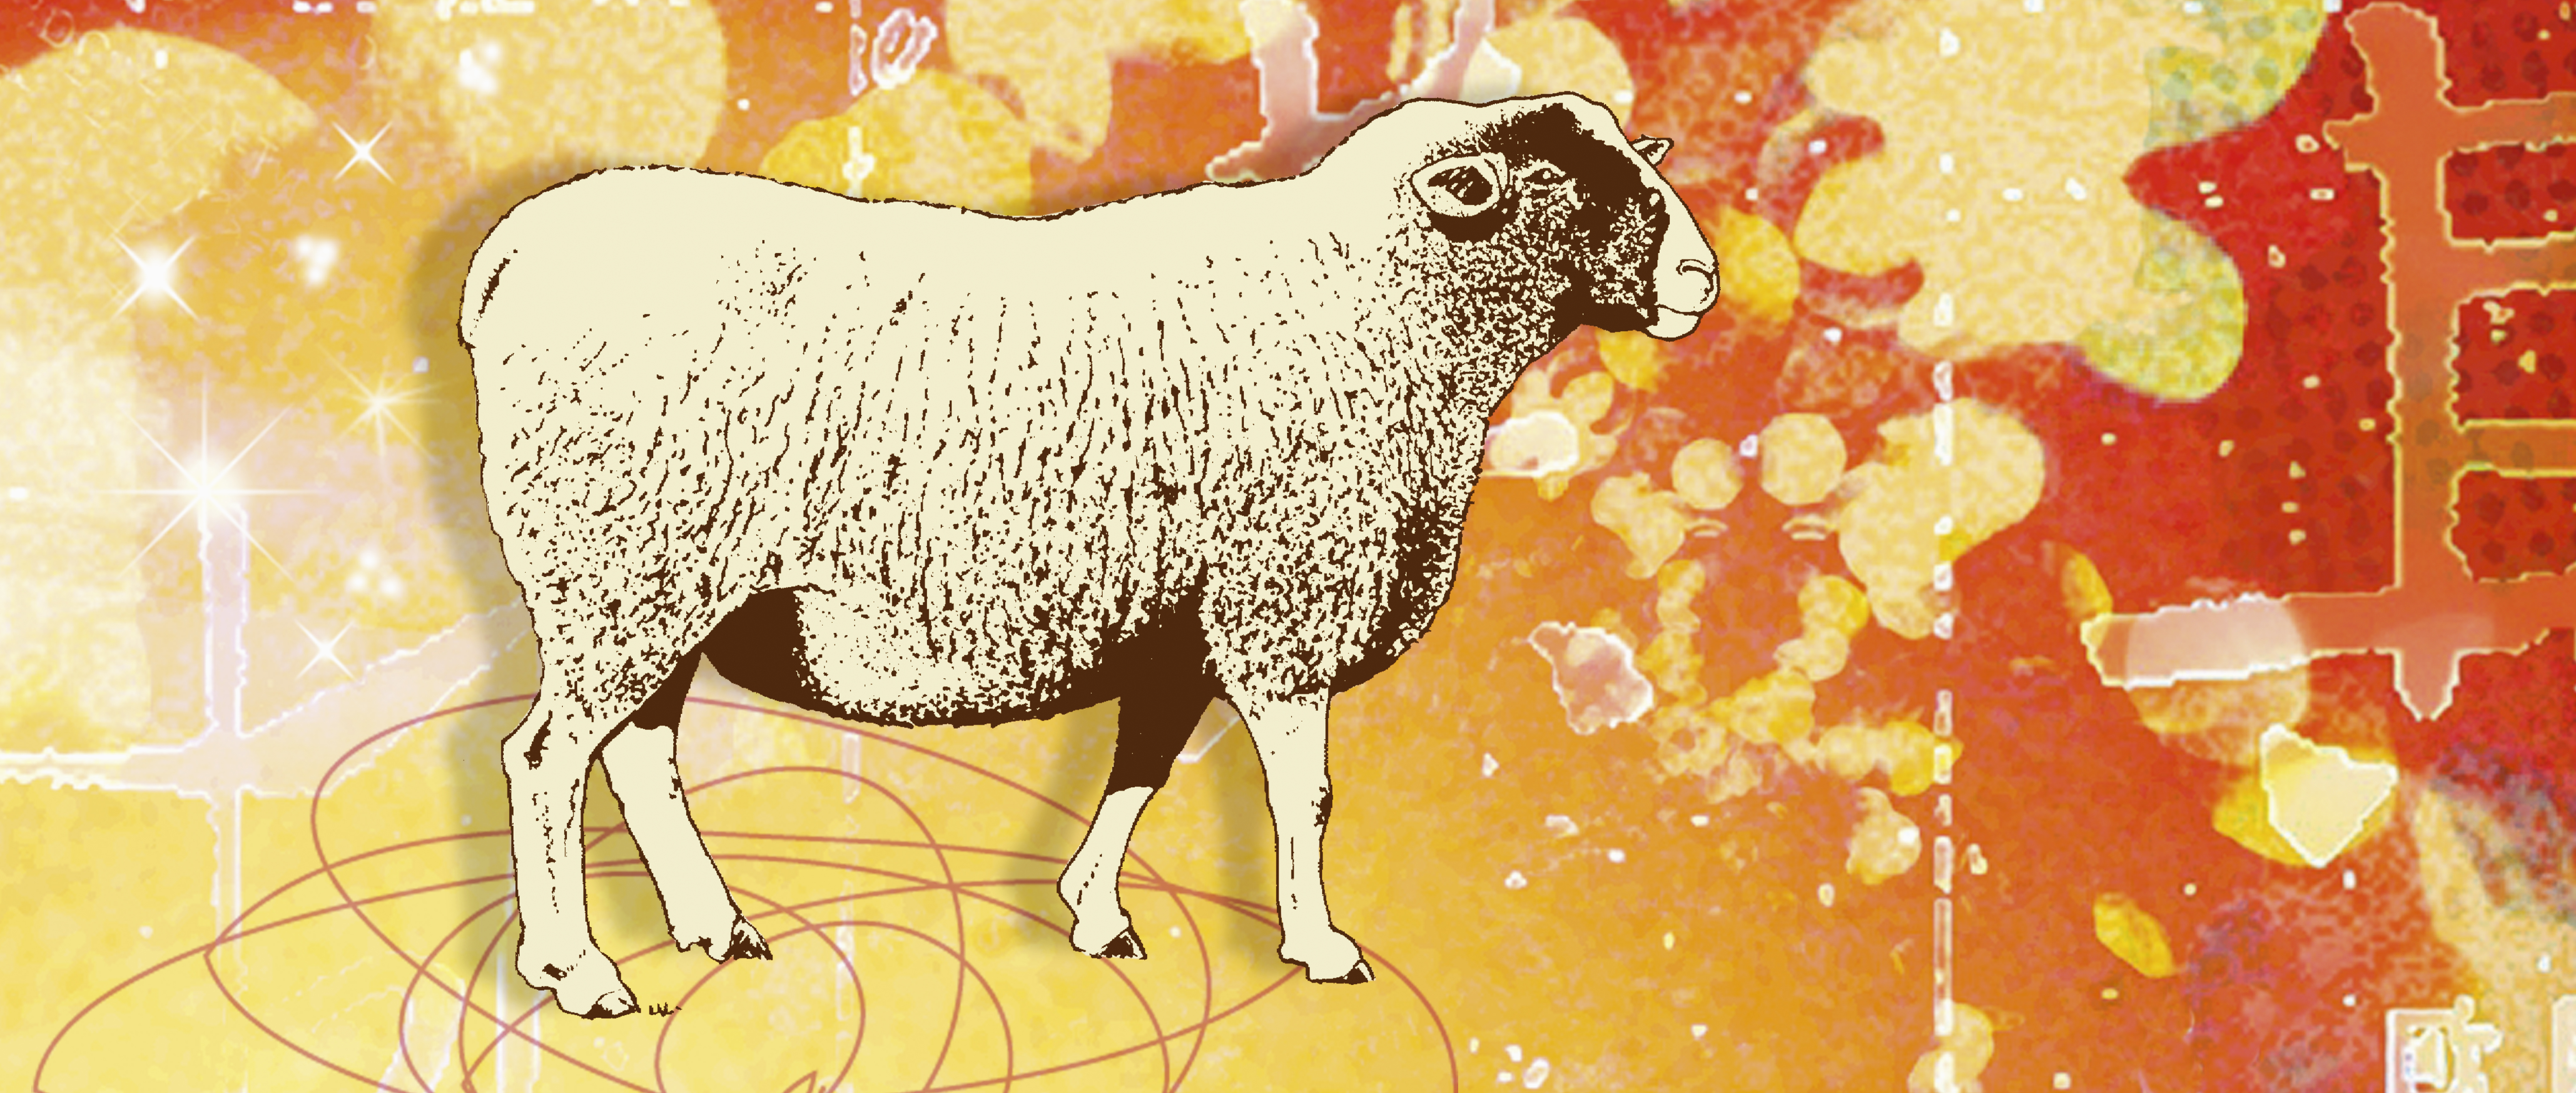 2015 года барана. Китайский знак зодиака овца. Год козы овцы. Овца знак зодиака год. Символ года овца.